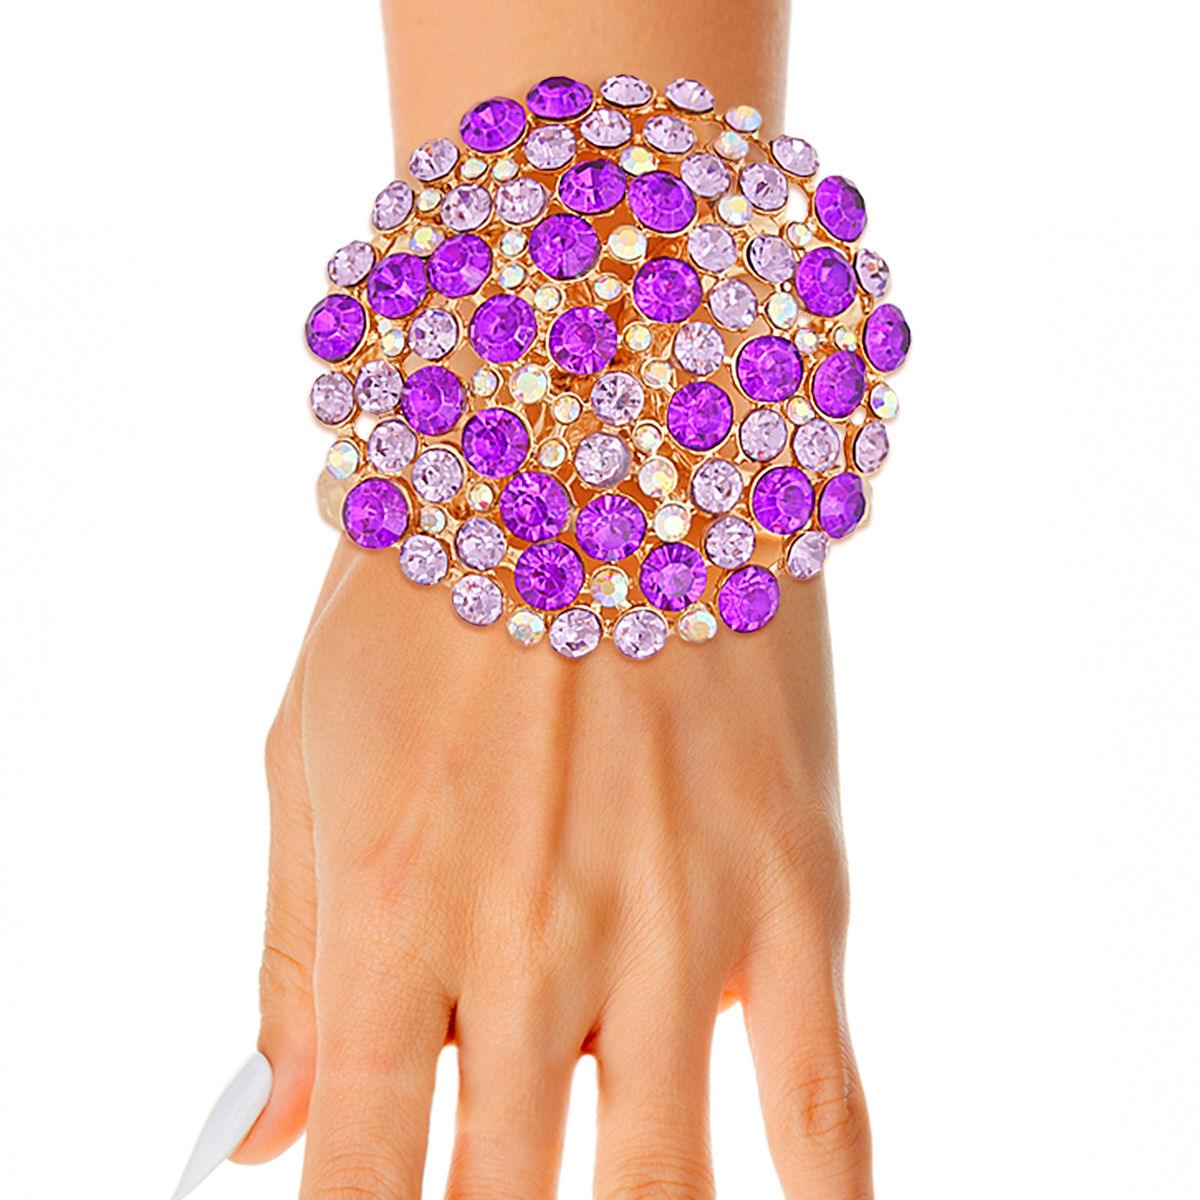 Purple Bouquet Domed Gold Cuff Bracelet: Dazzle Your Style